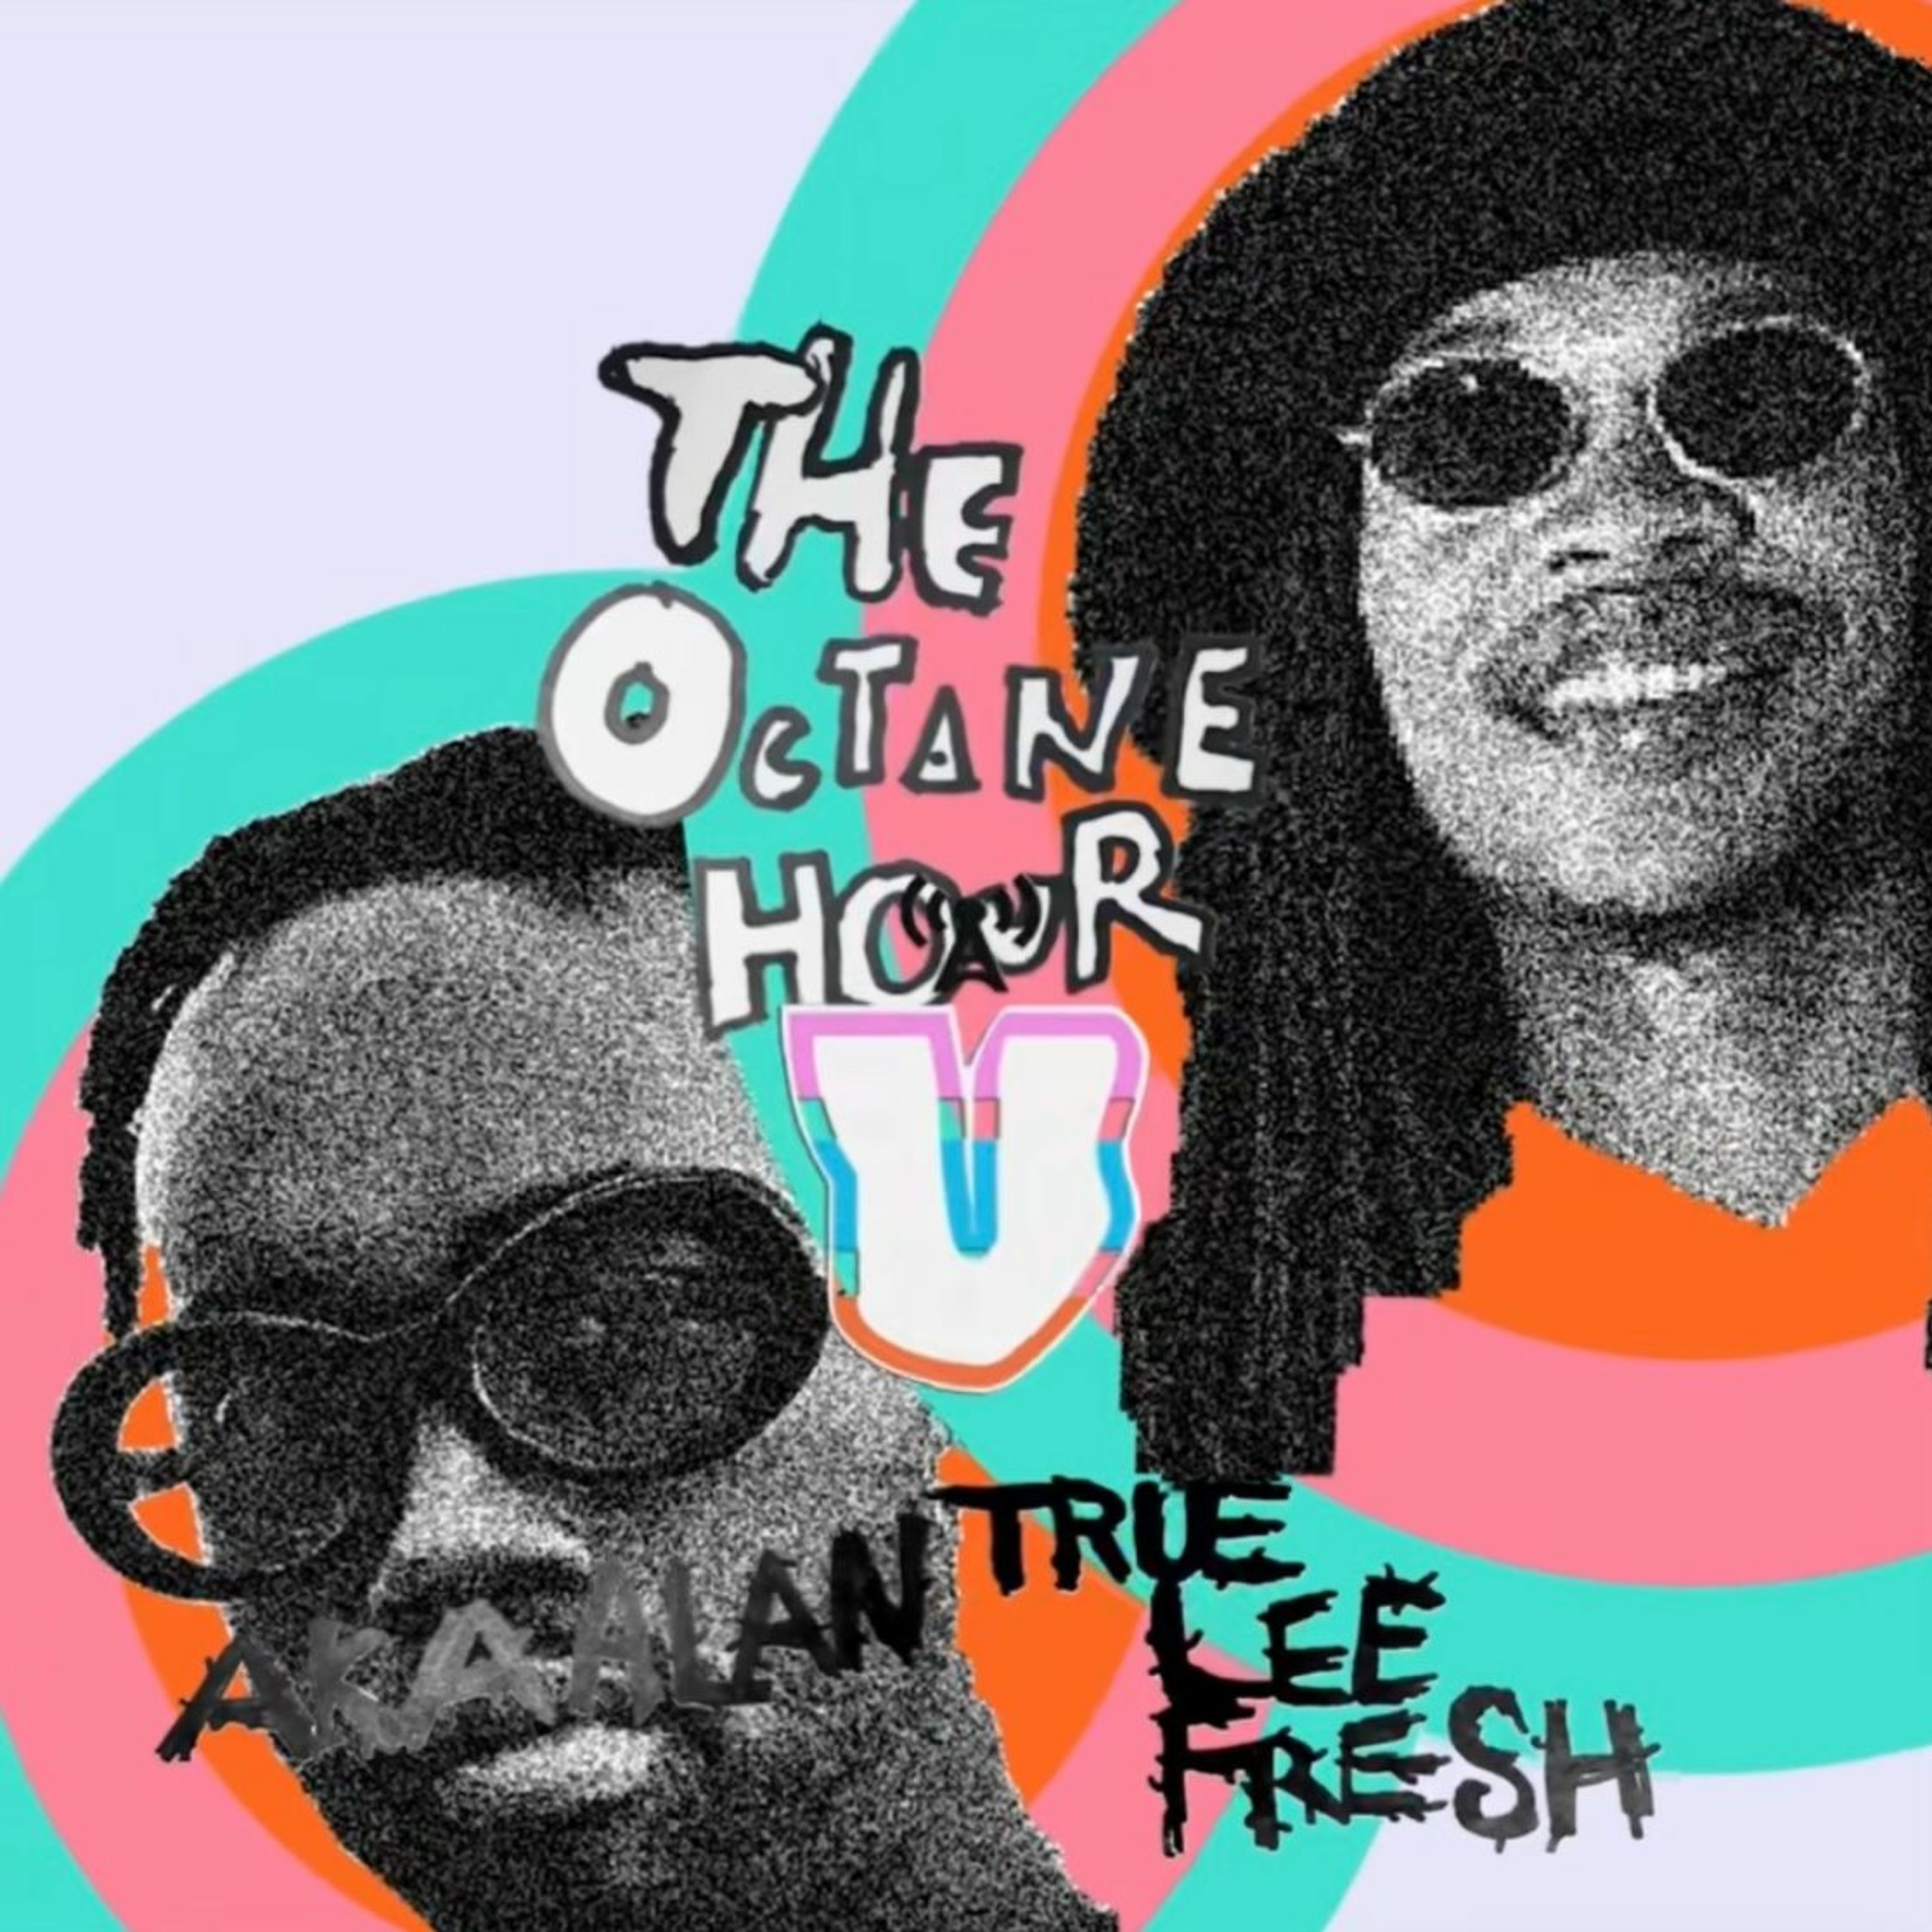 The Octane Hour w/ True Lee Fresh